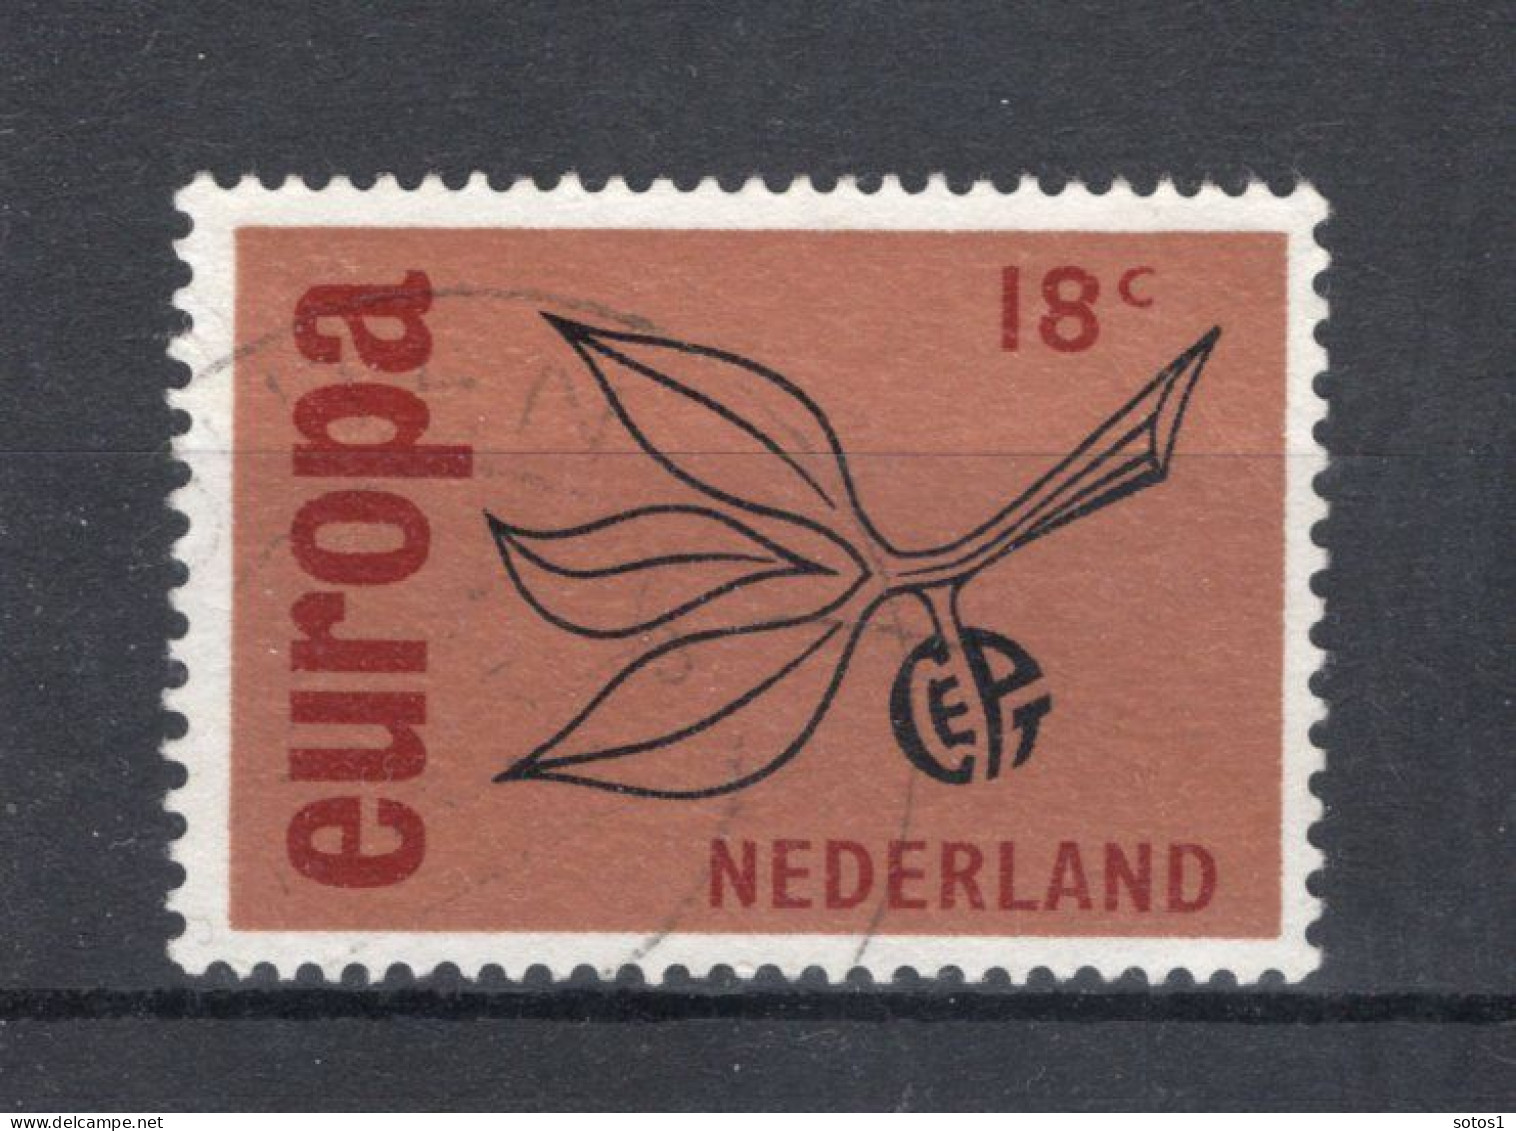 (B) Nederland CEPT 848° Gestempeld 1965 - 1965